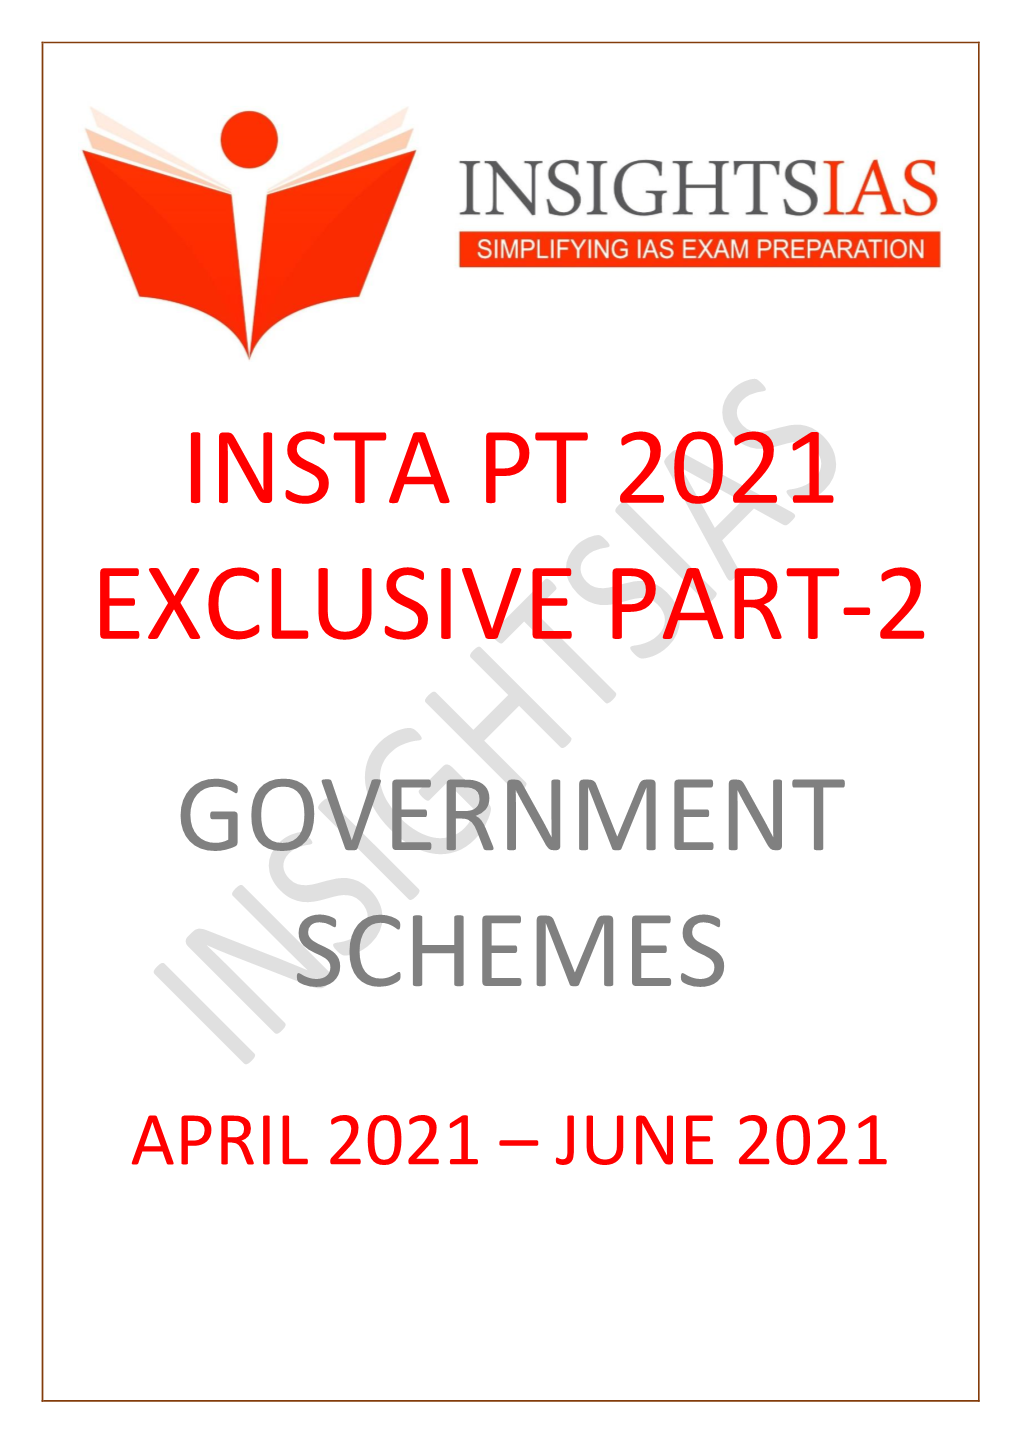 Insta Pt 2021 Exclusive Part-2 (Government Schemes)